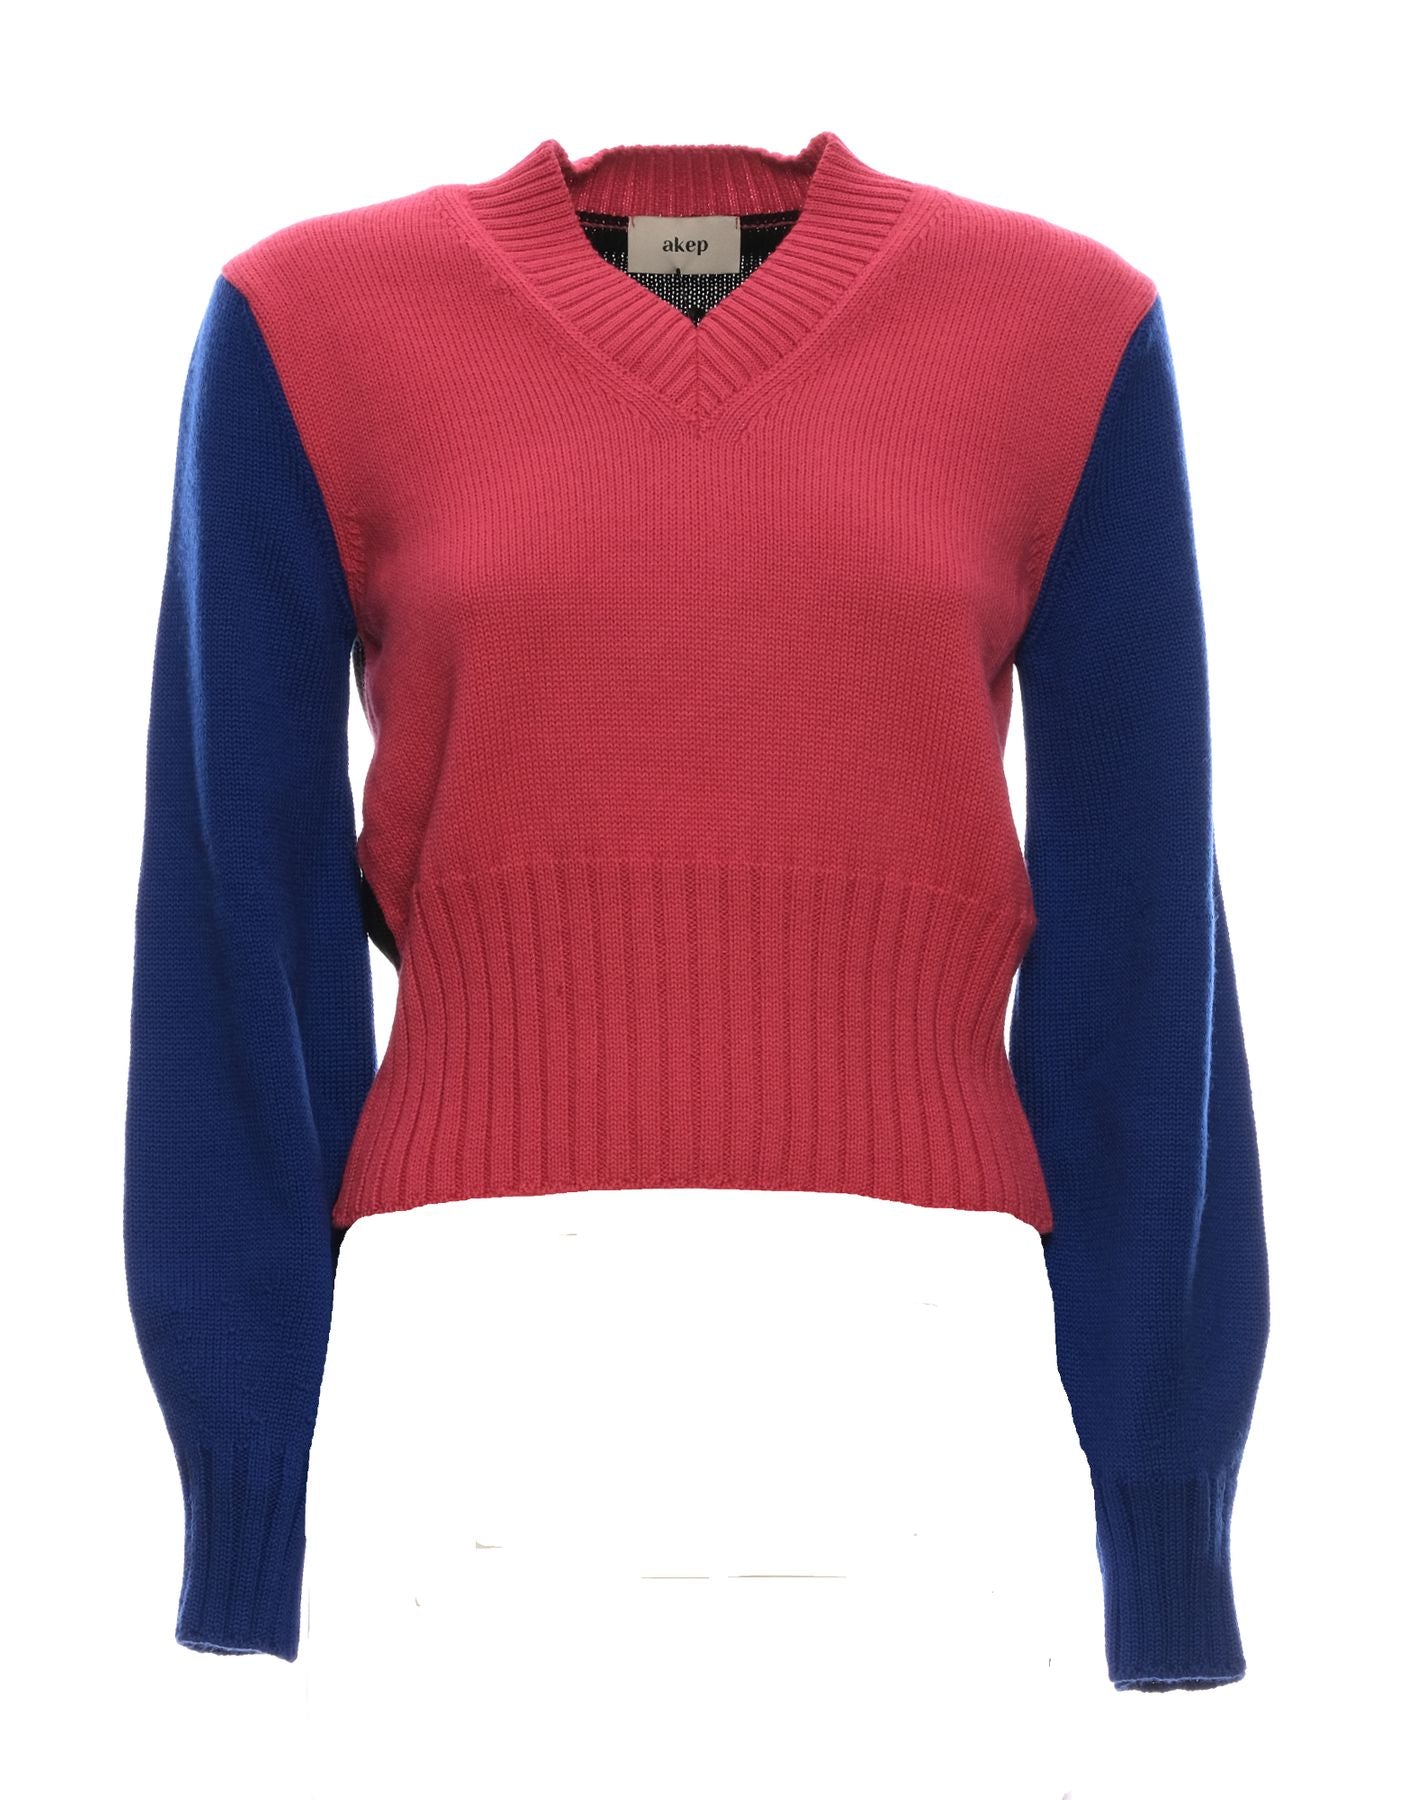 Sweater Frau Akep K11039 Variante 1